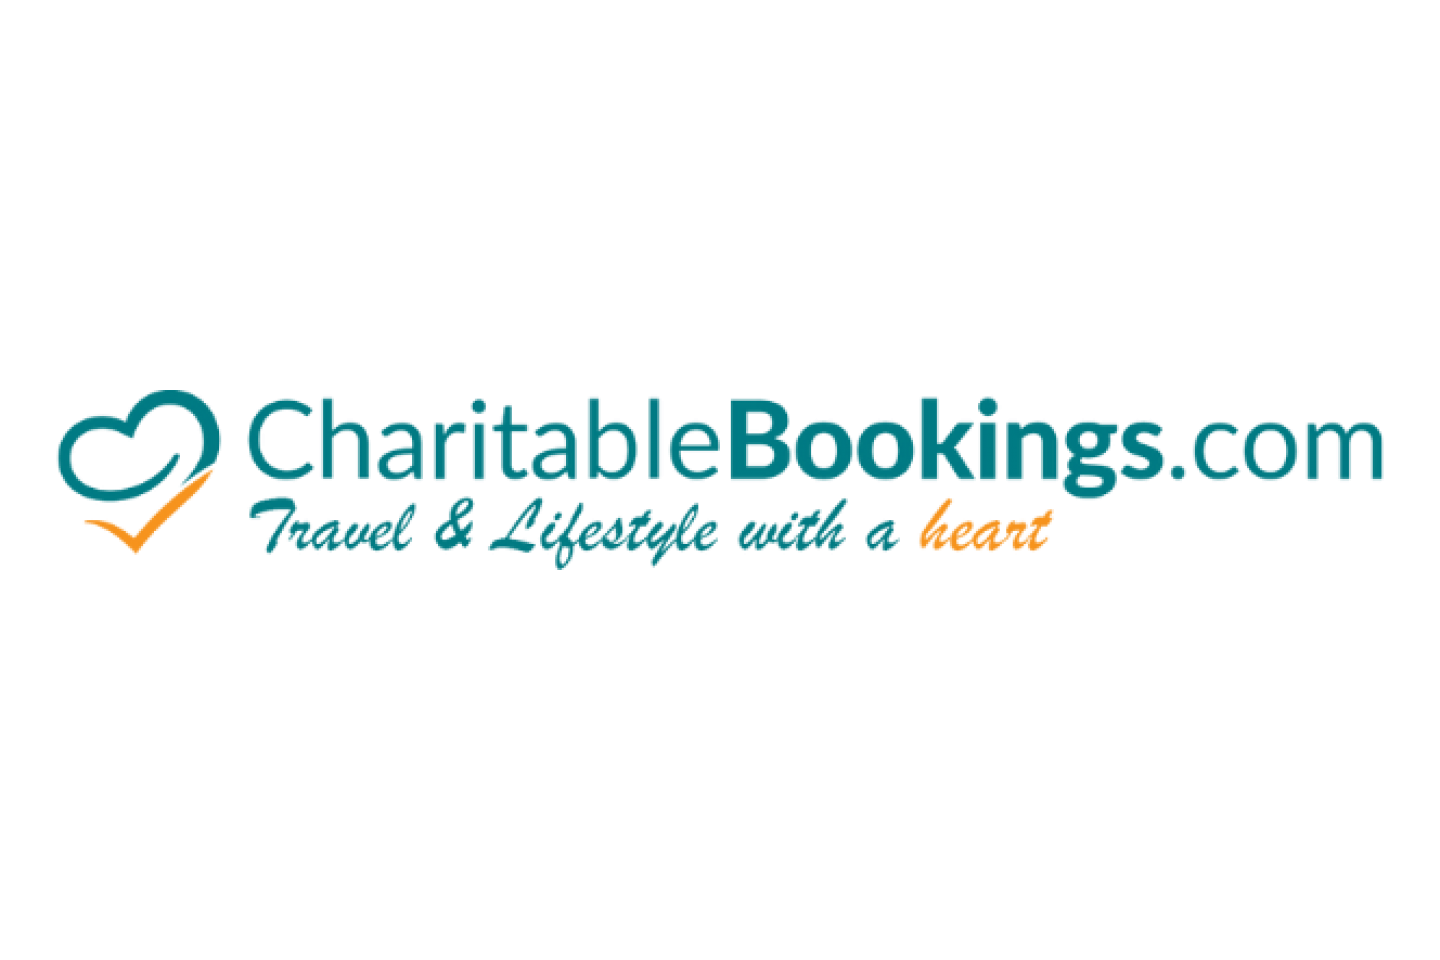 Charitable bookings.com logo